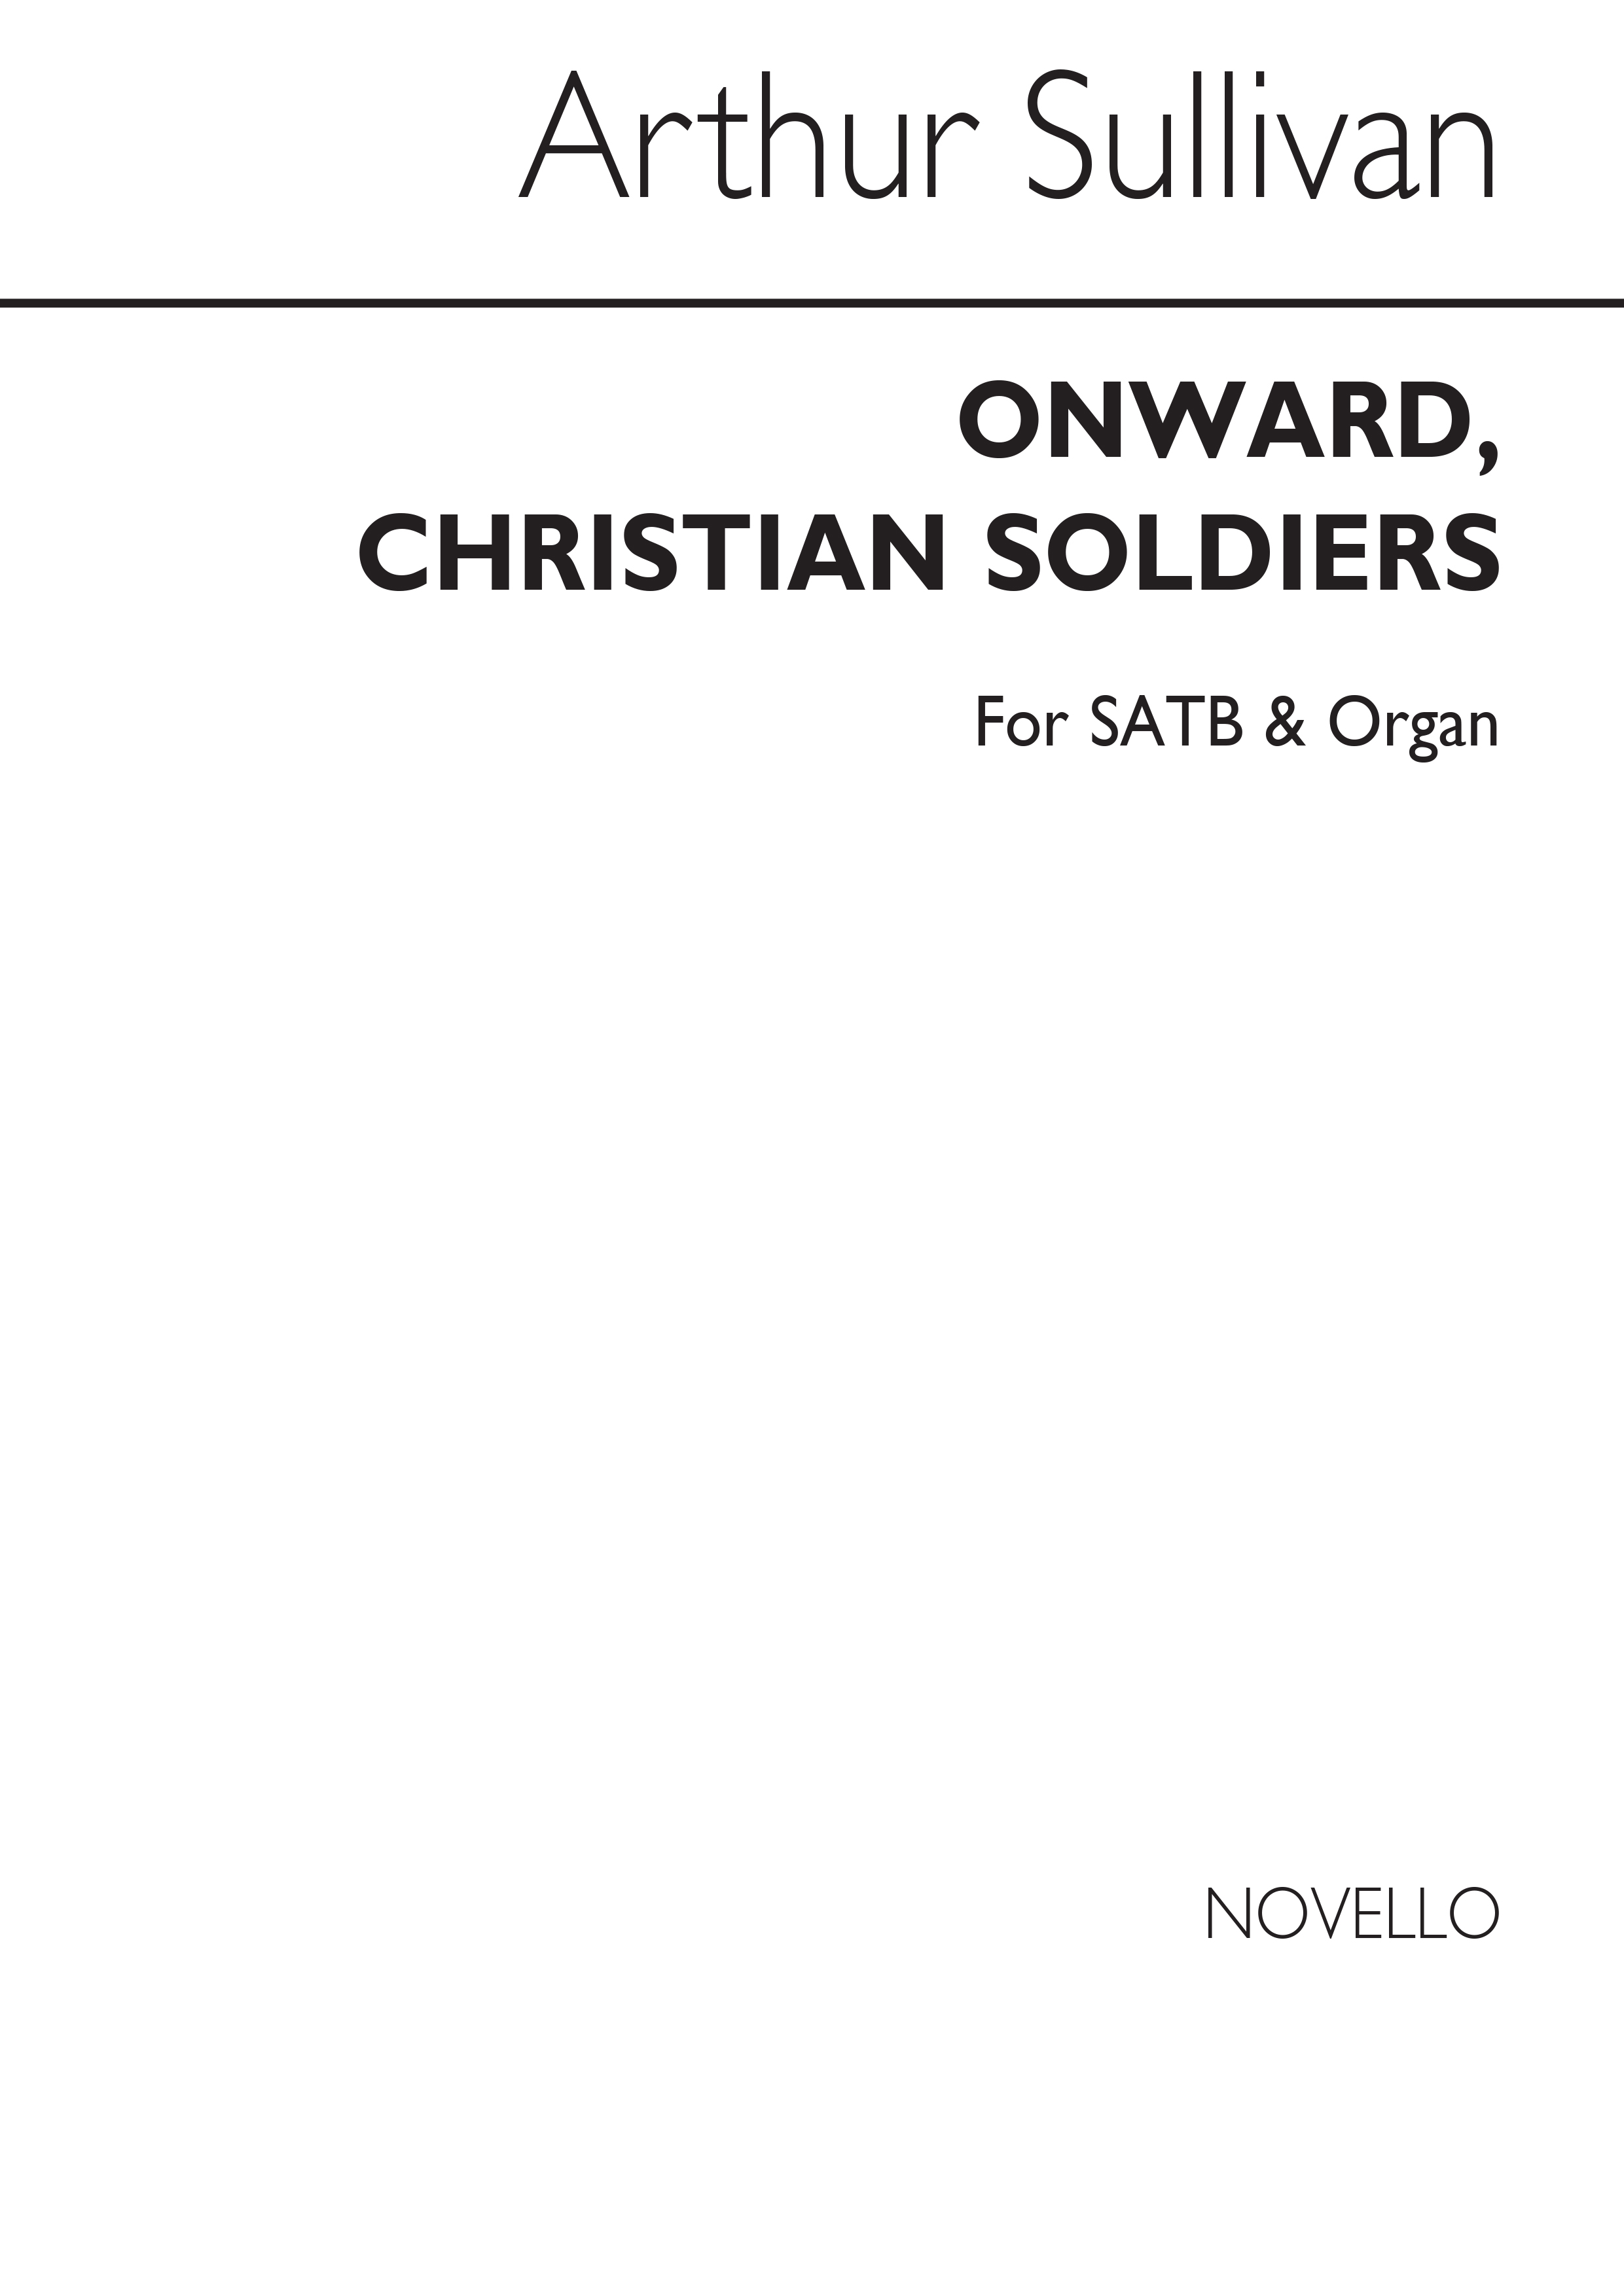 Arthur Seymour Sullivan: Onward Christian Soldiers: SATB: Vocal Score